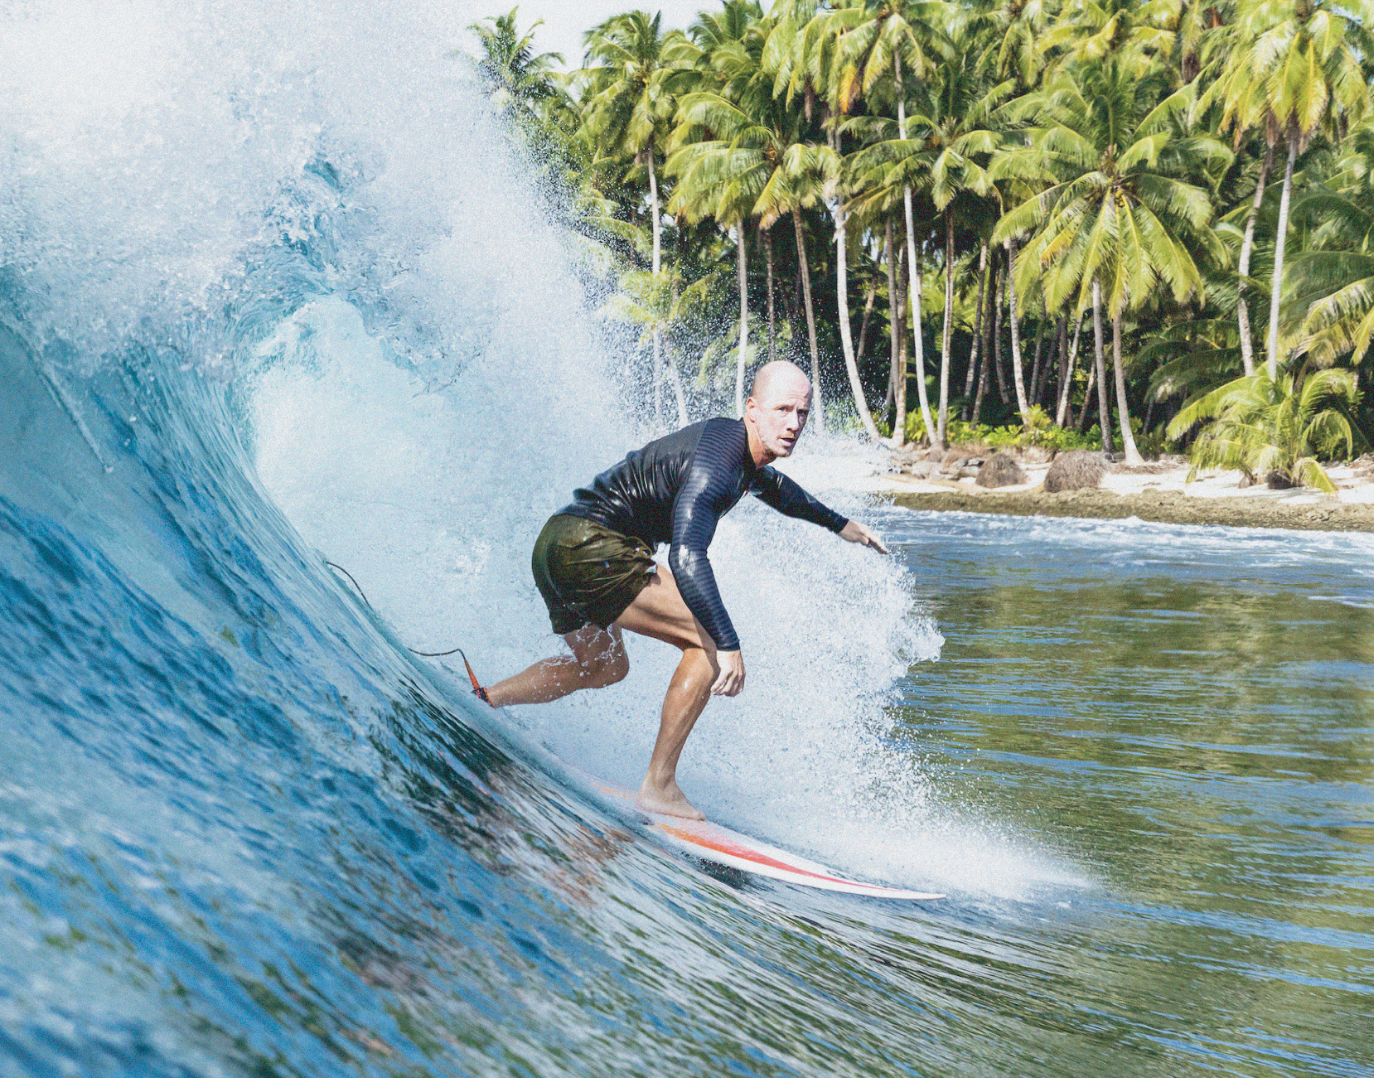 man surfing on crashing wave with binkybro swimsuit